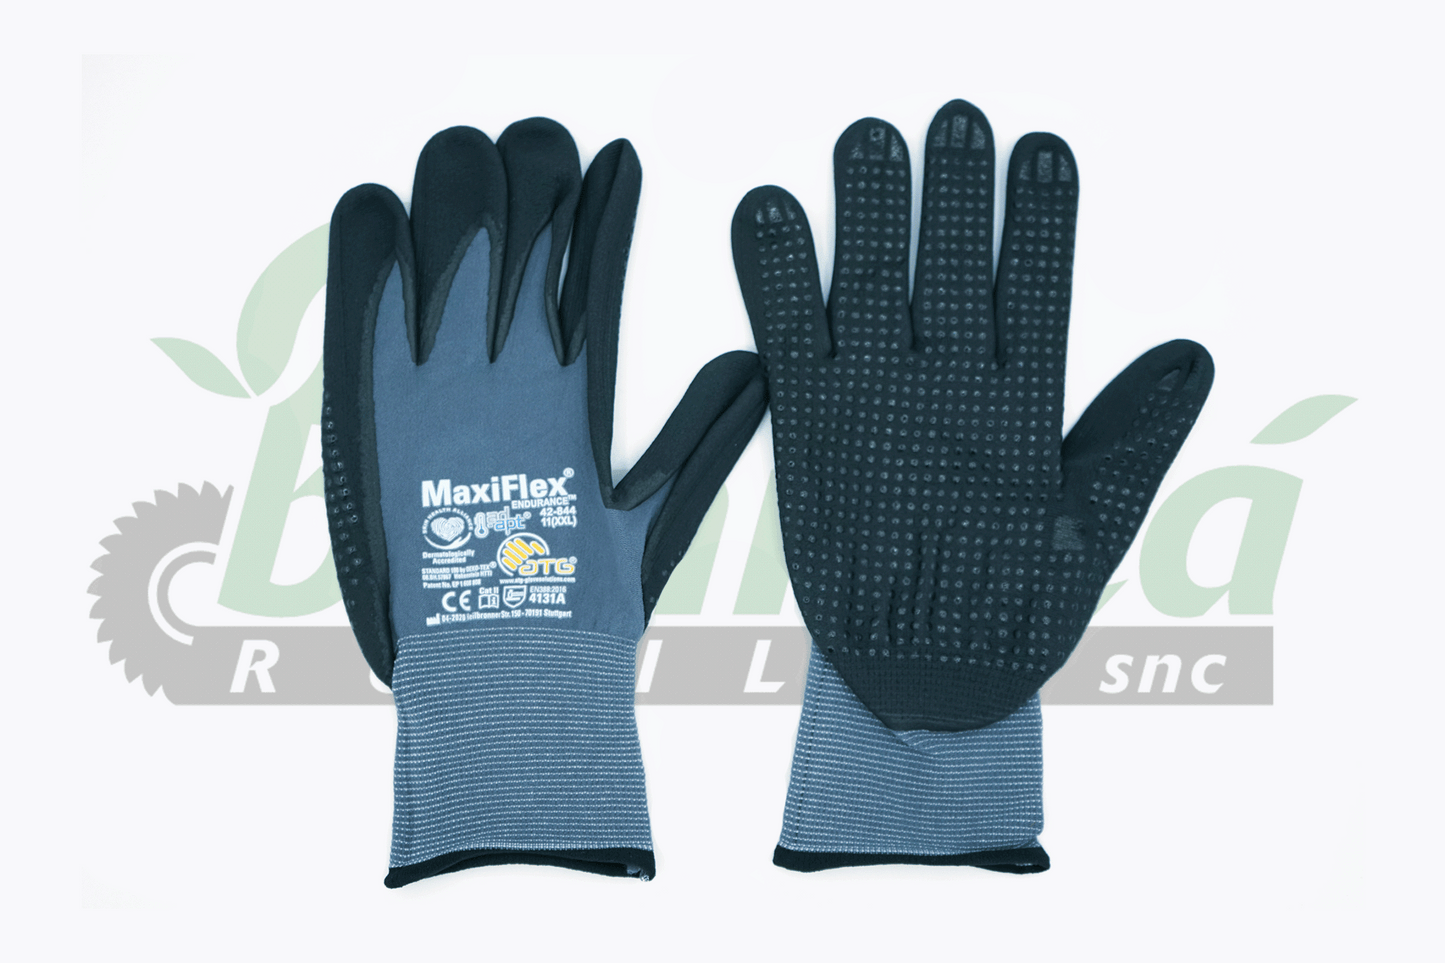 Maxiflex gloves